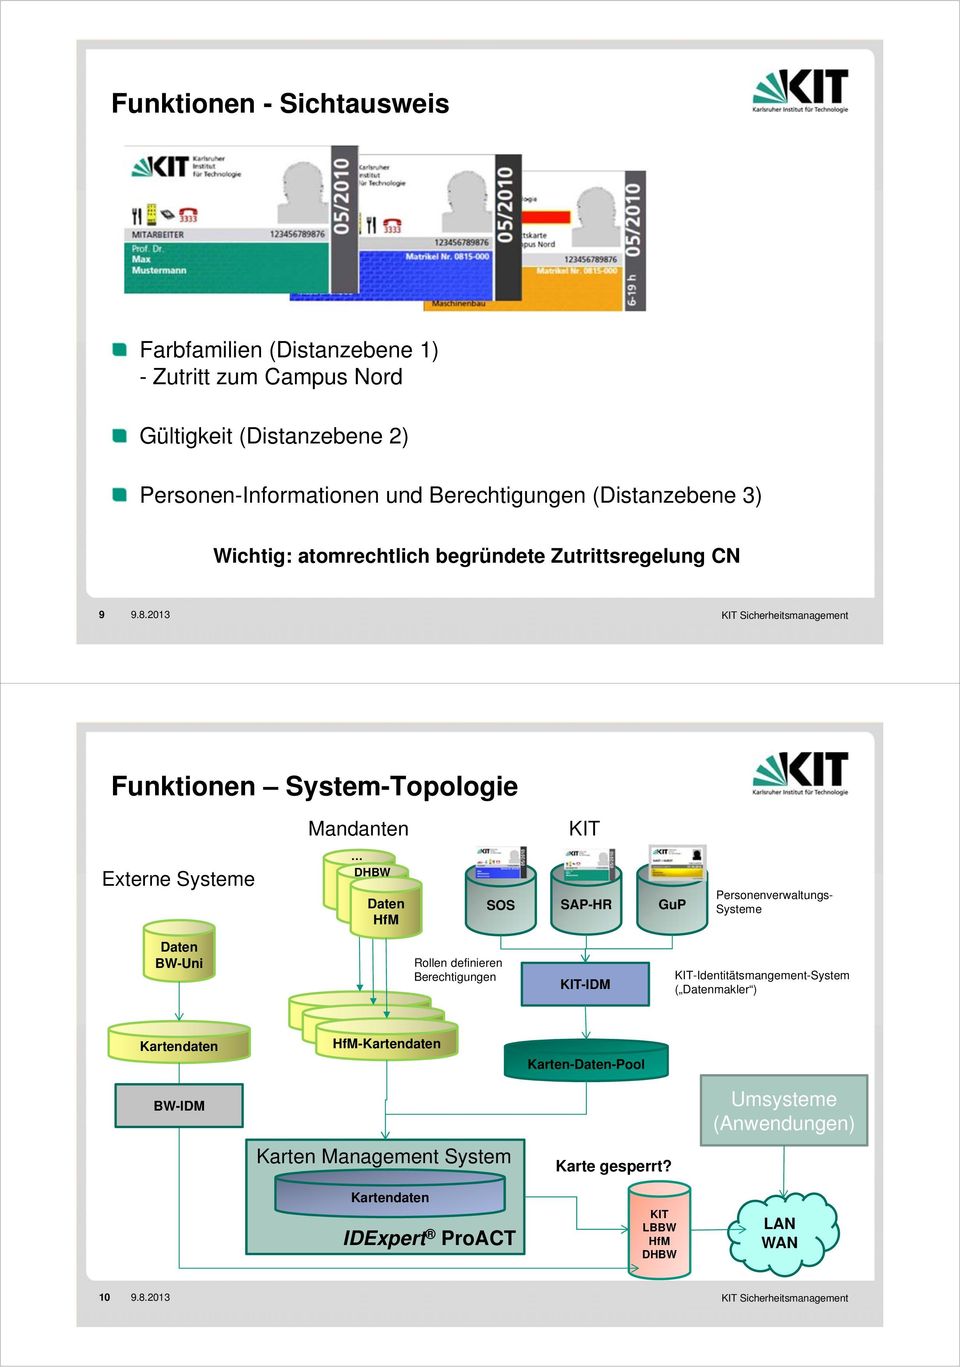 2013 Funktionen System-Topologie Externe Systeme Daten BW-Uni Mandanten Daten DHBW PH Daten PH Daten HfM Rollen definieren Berechtigungen KIT SOS SAP-HR GuP KIT-IDM Gäste